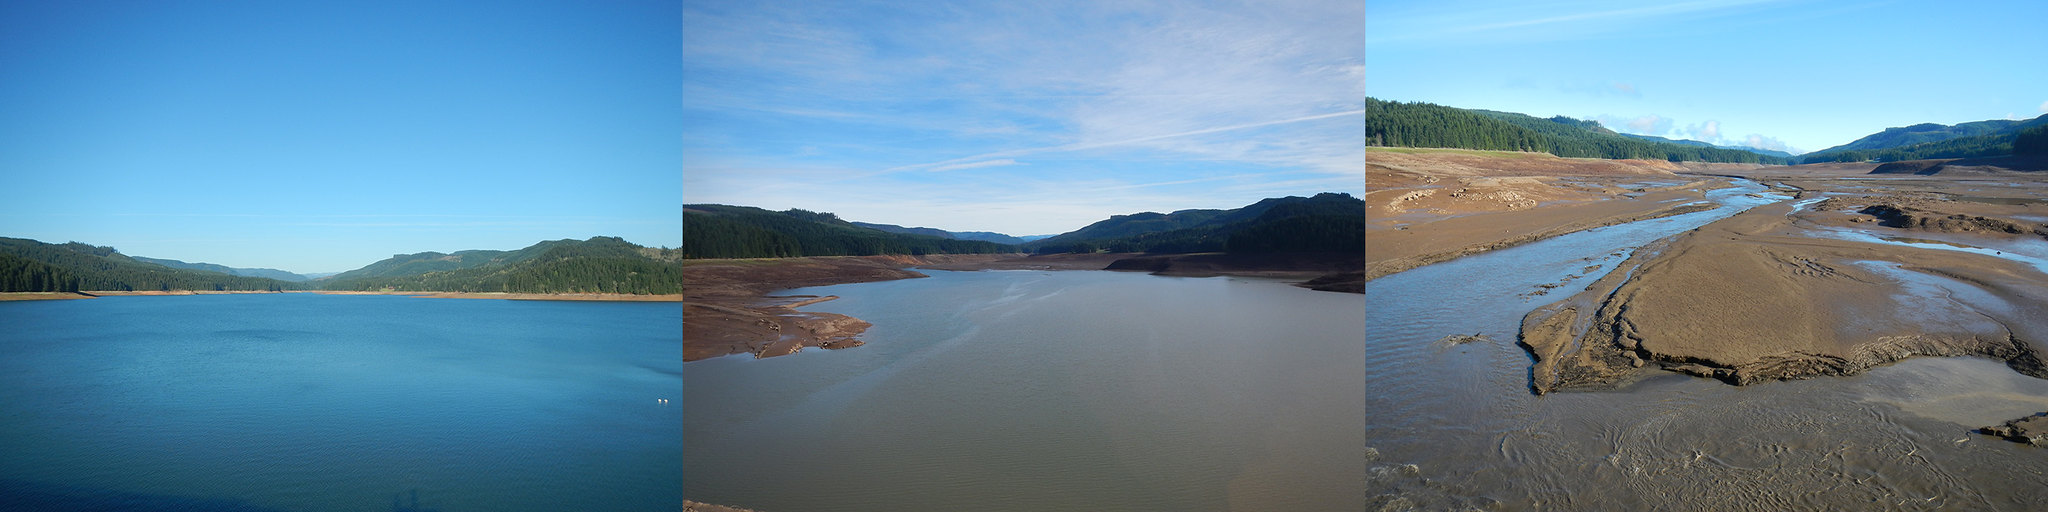 Study: Draining Reservoir Helps Salmon